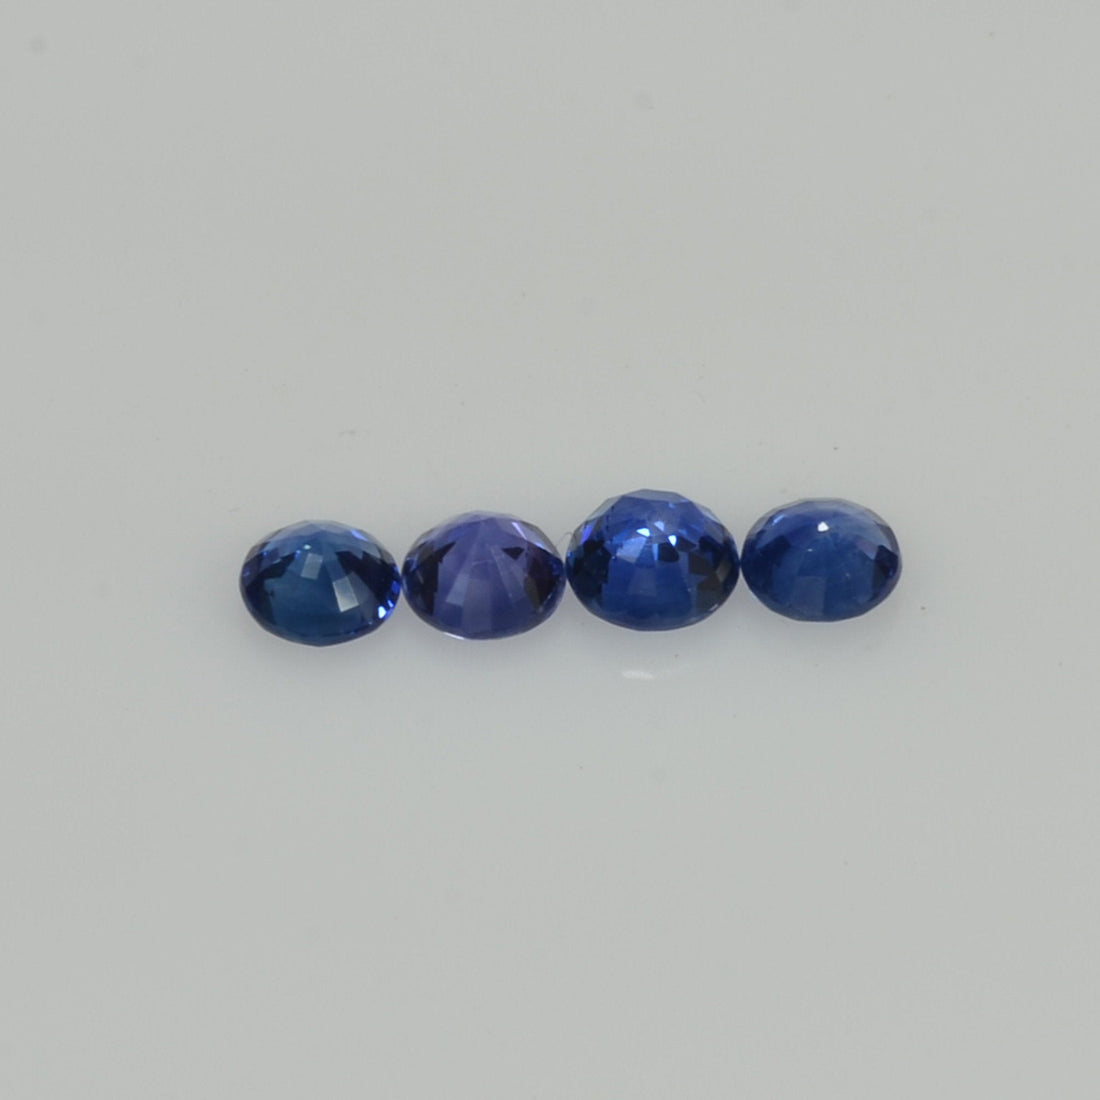 2.5-4.5 mm Natural Blue Sapphire Loose Gemstone Round Diamond Cut Vs Quality Color - Thai Gems Export Ltd.